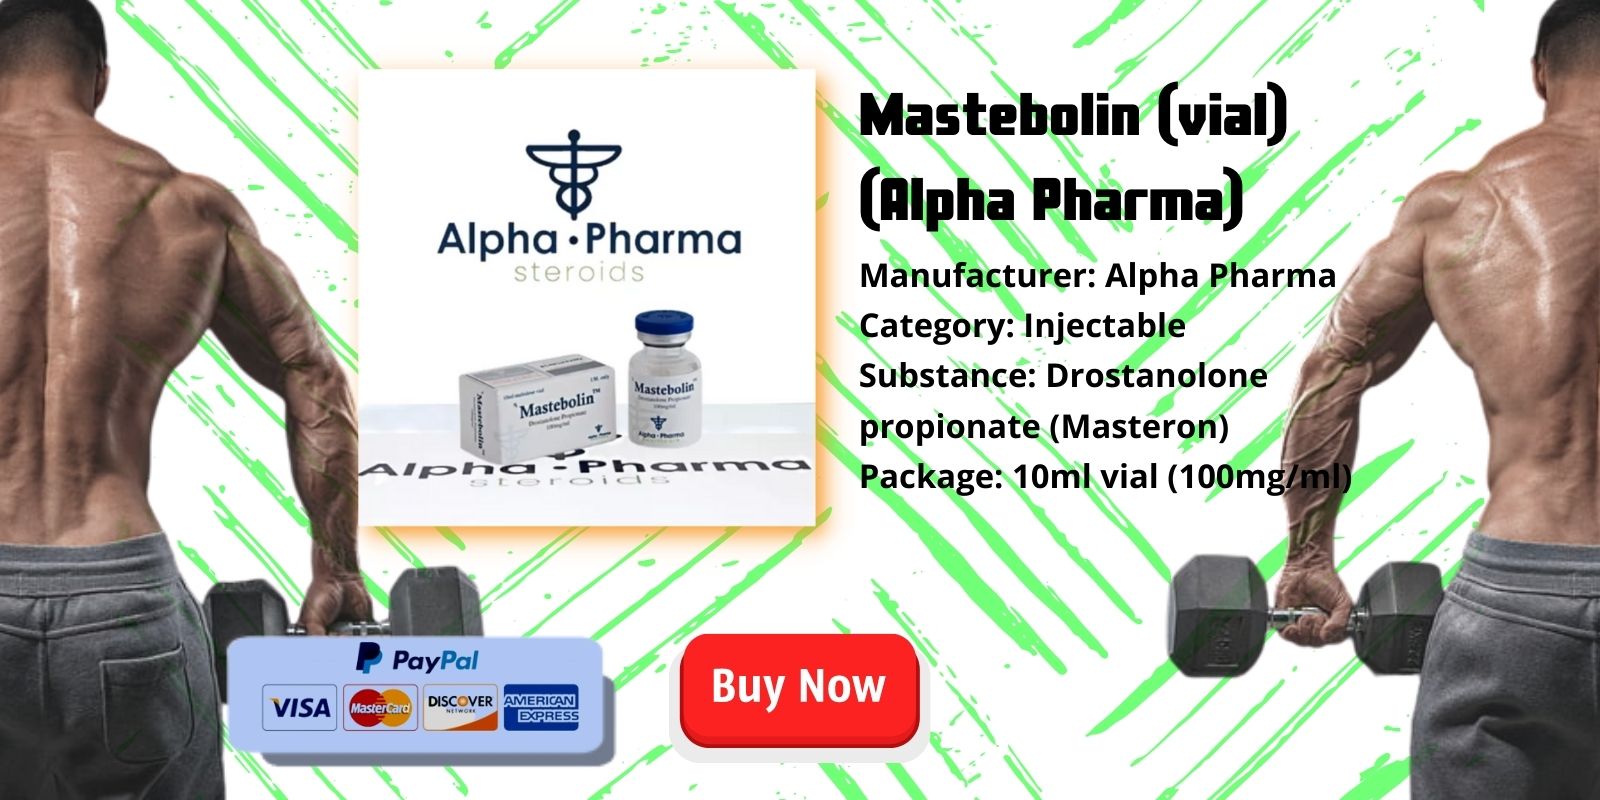 masterbolin (vial) by Alpha Pharma